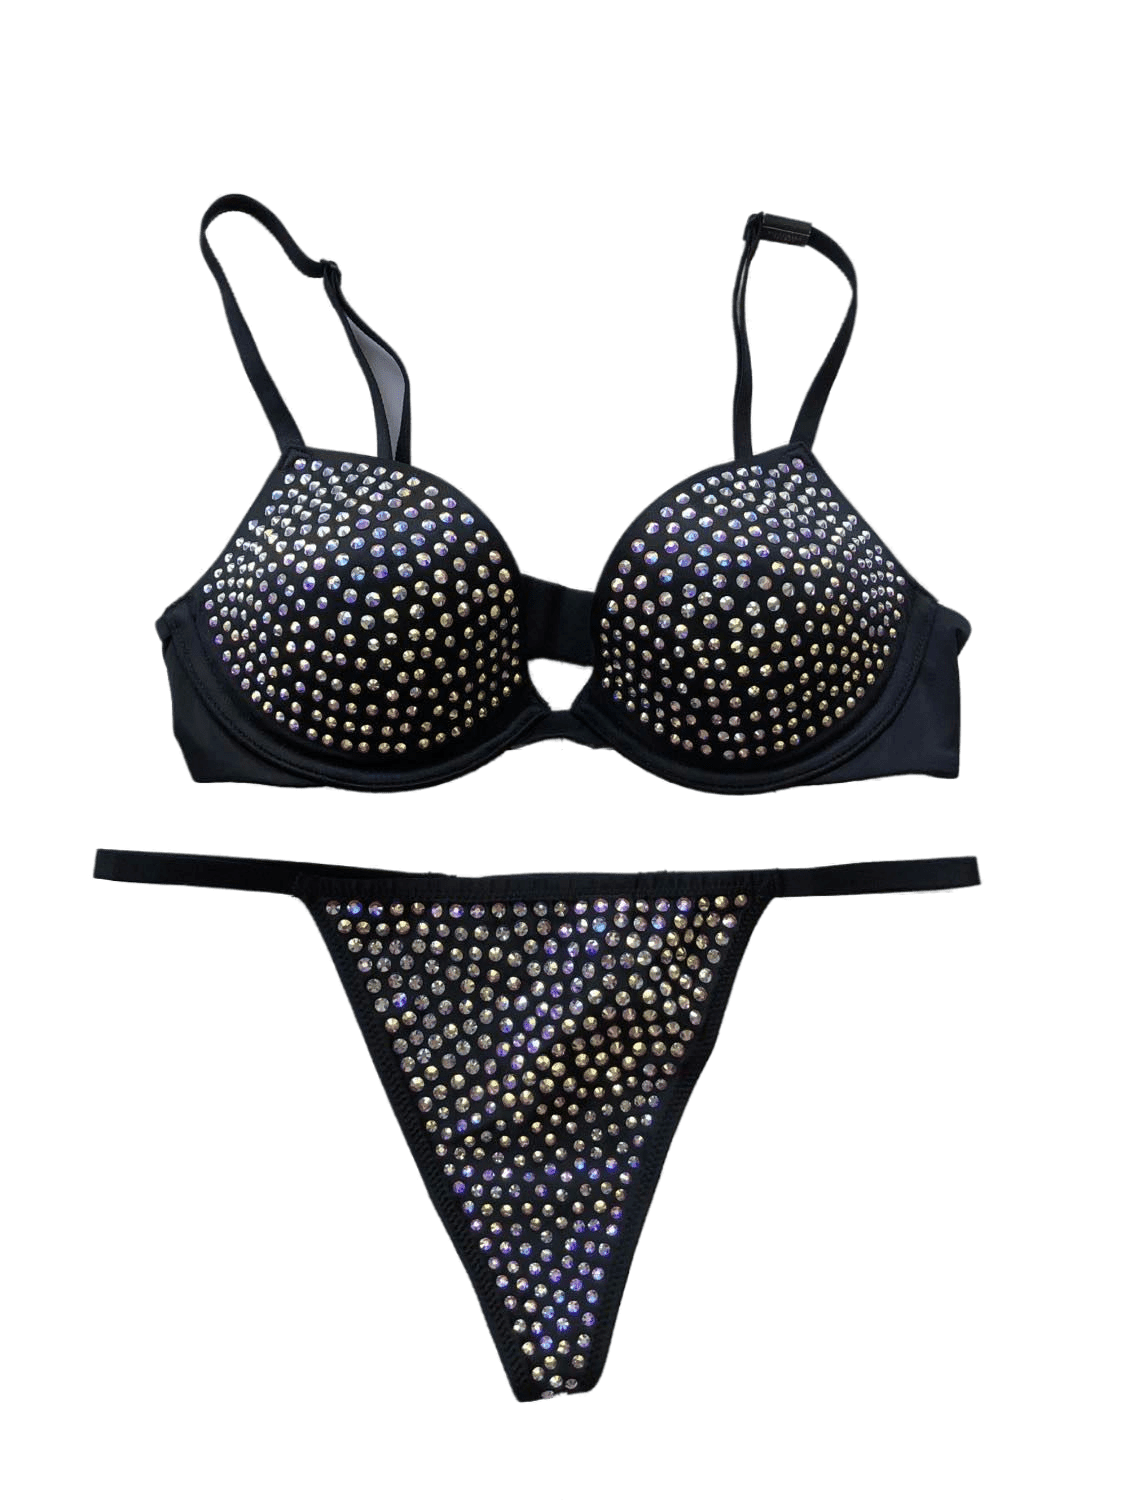 Victoria's Secret Very Sexy Embellished Low-cut Demi Bra and Panty Set  Bling Rhinestone Black 32C/XS New